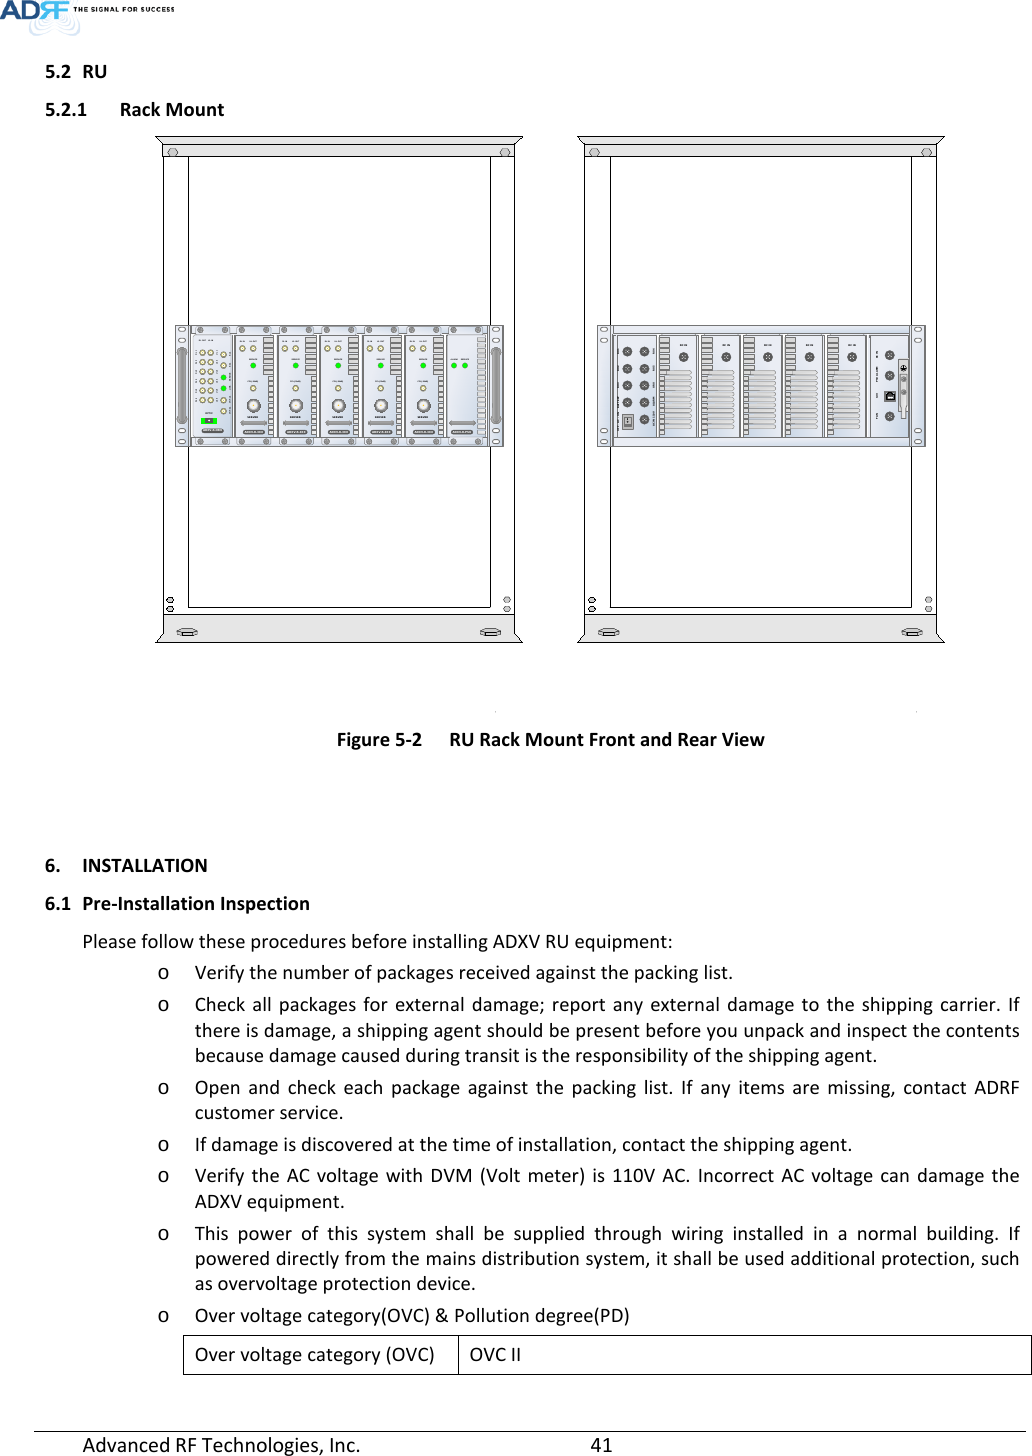 Page 41 of ADRF KOREA ADXV-R-336 DAS (Distributed Antenna System) User Manual ADXV DAS